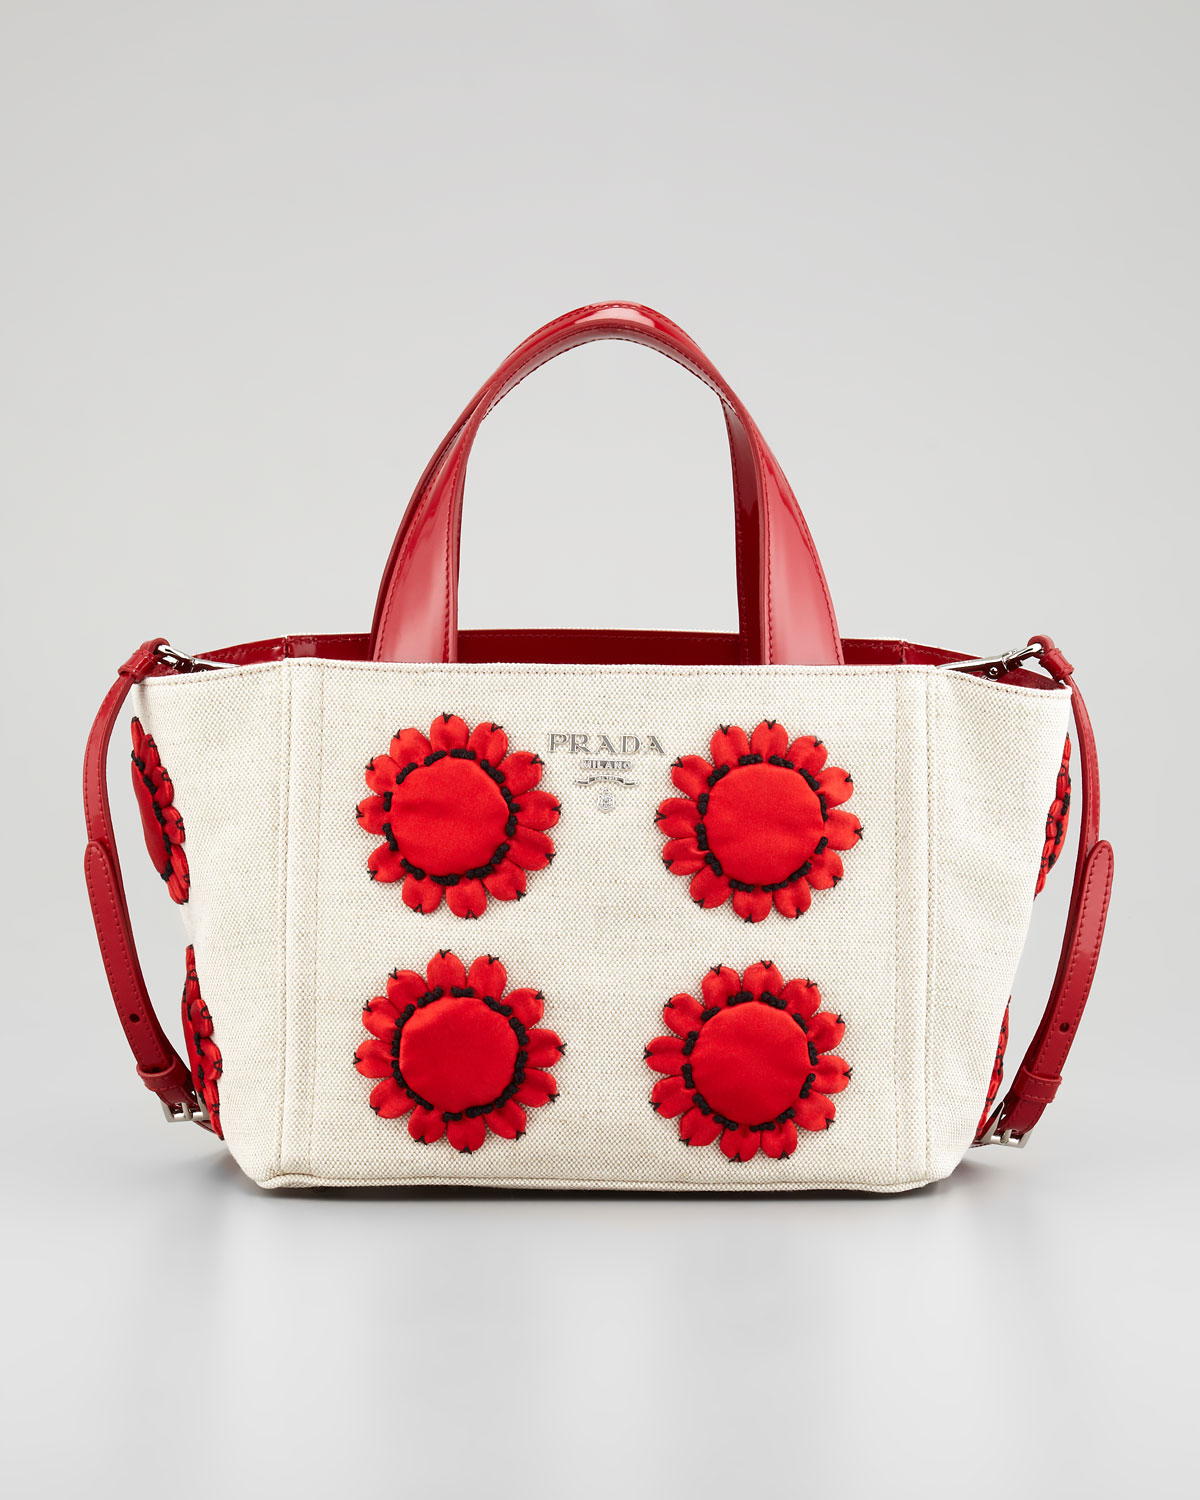 prada look alike bags - Prada Floral Basket Tote Bag in Red (multi colors) | Lyst